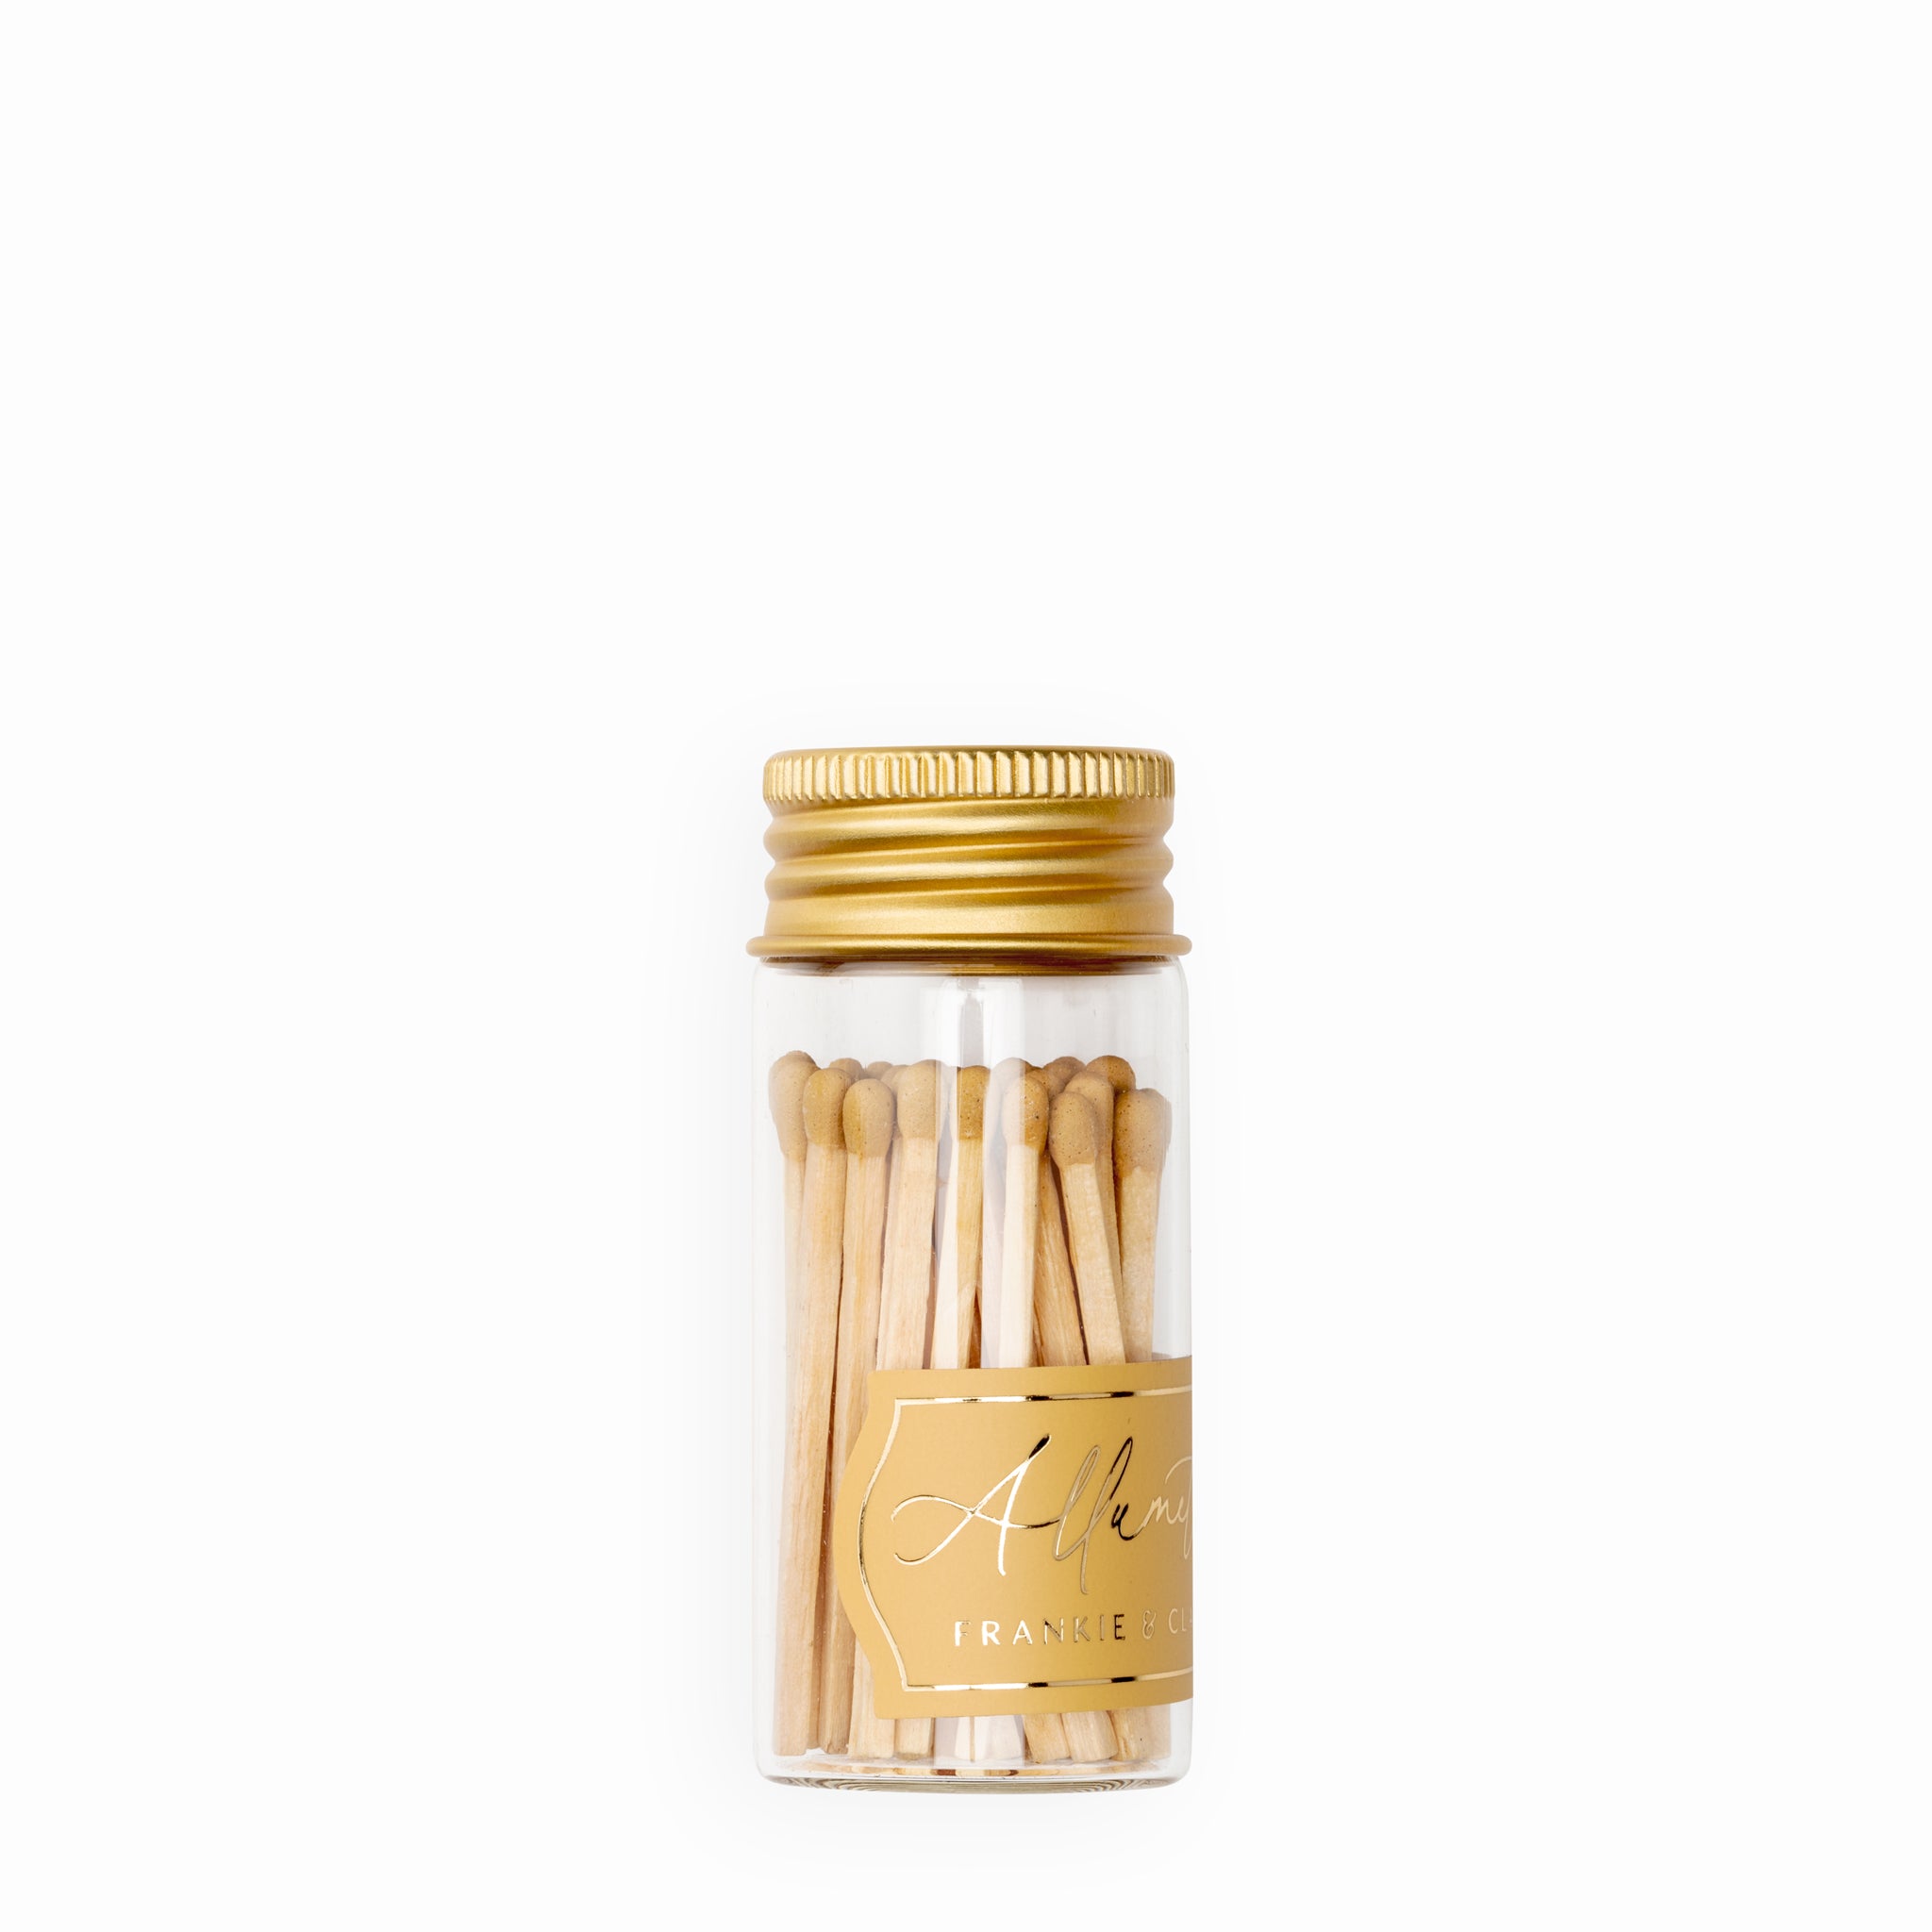 Honey Gold Allumette Match Jar